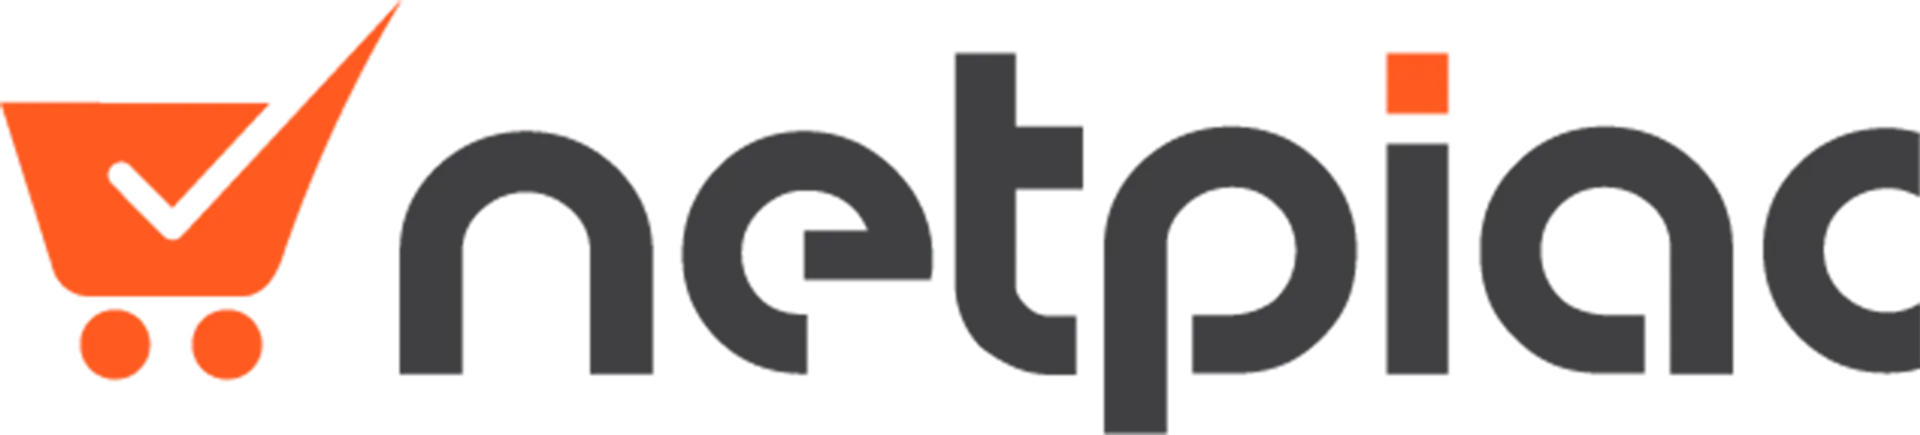 NETPIAC logo